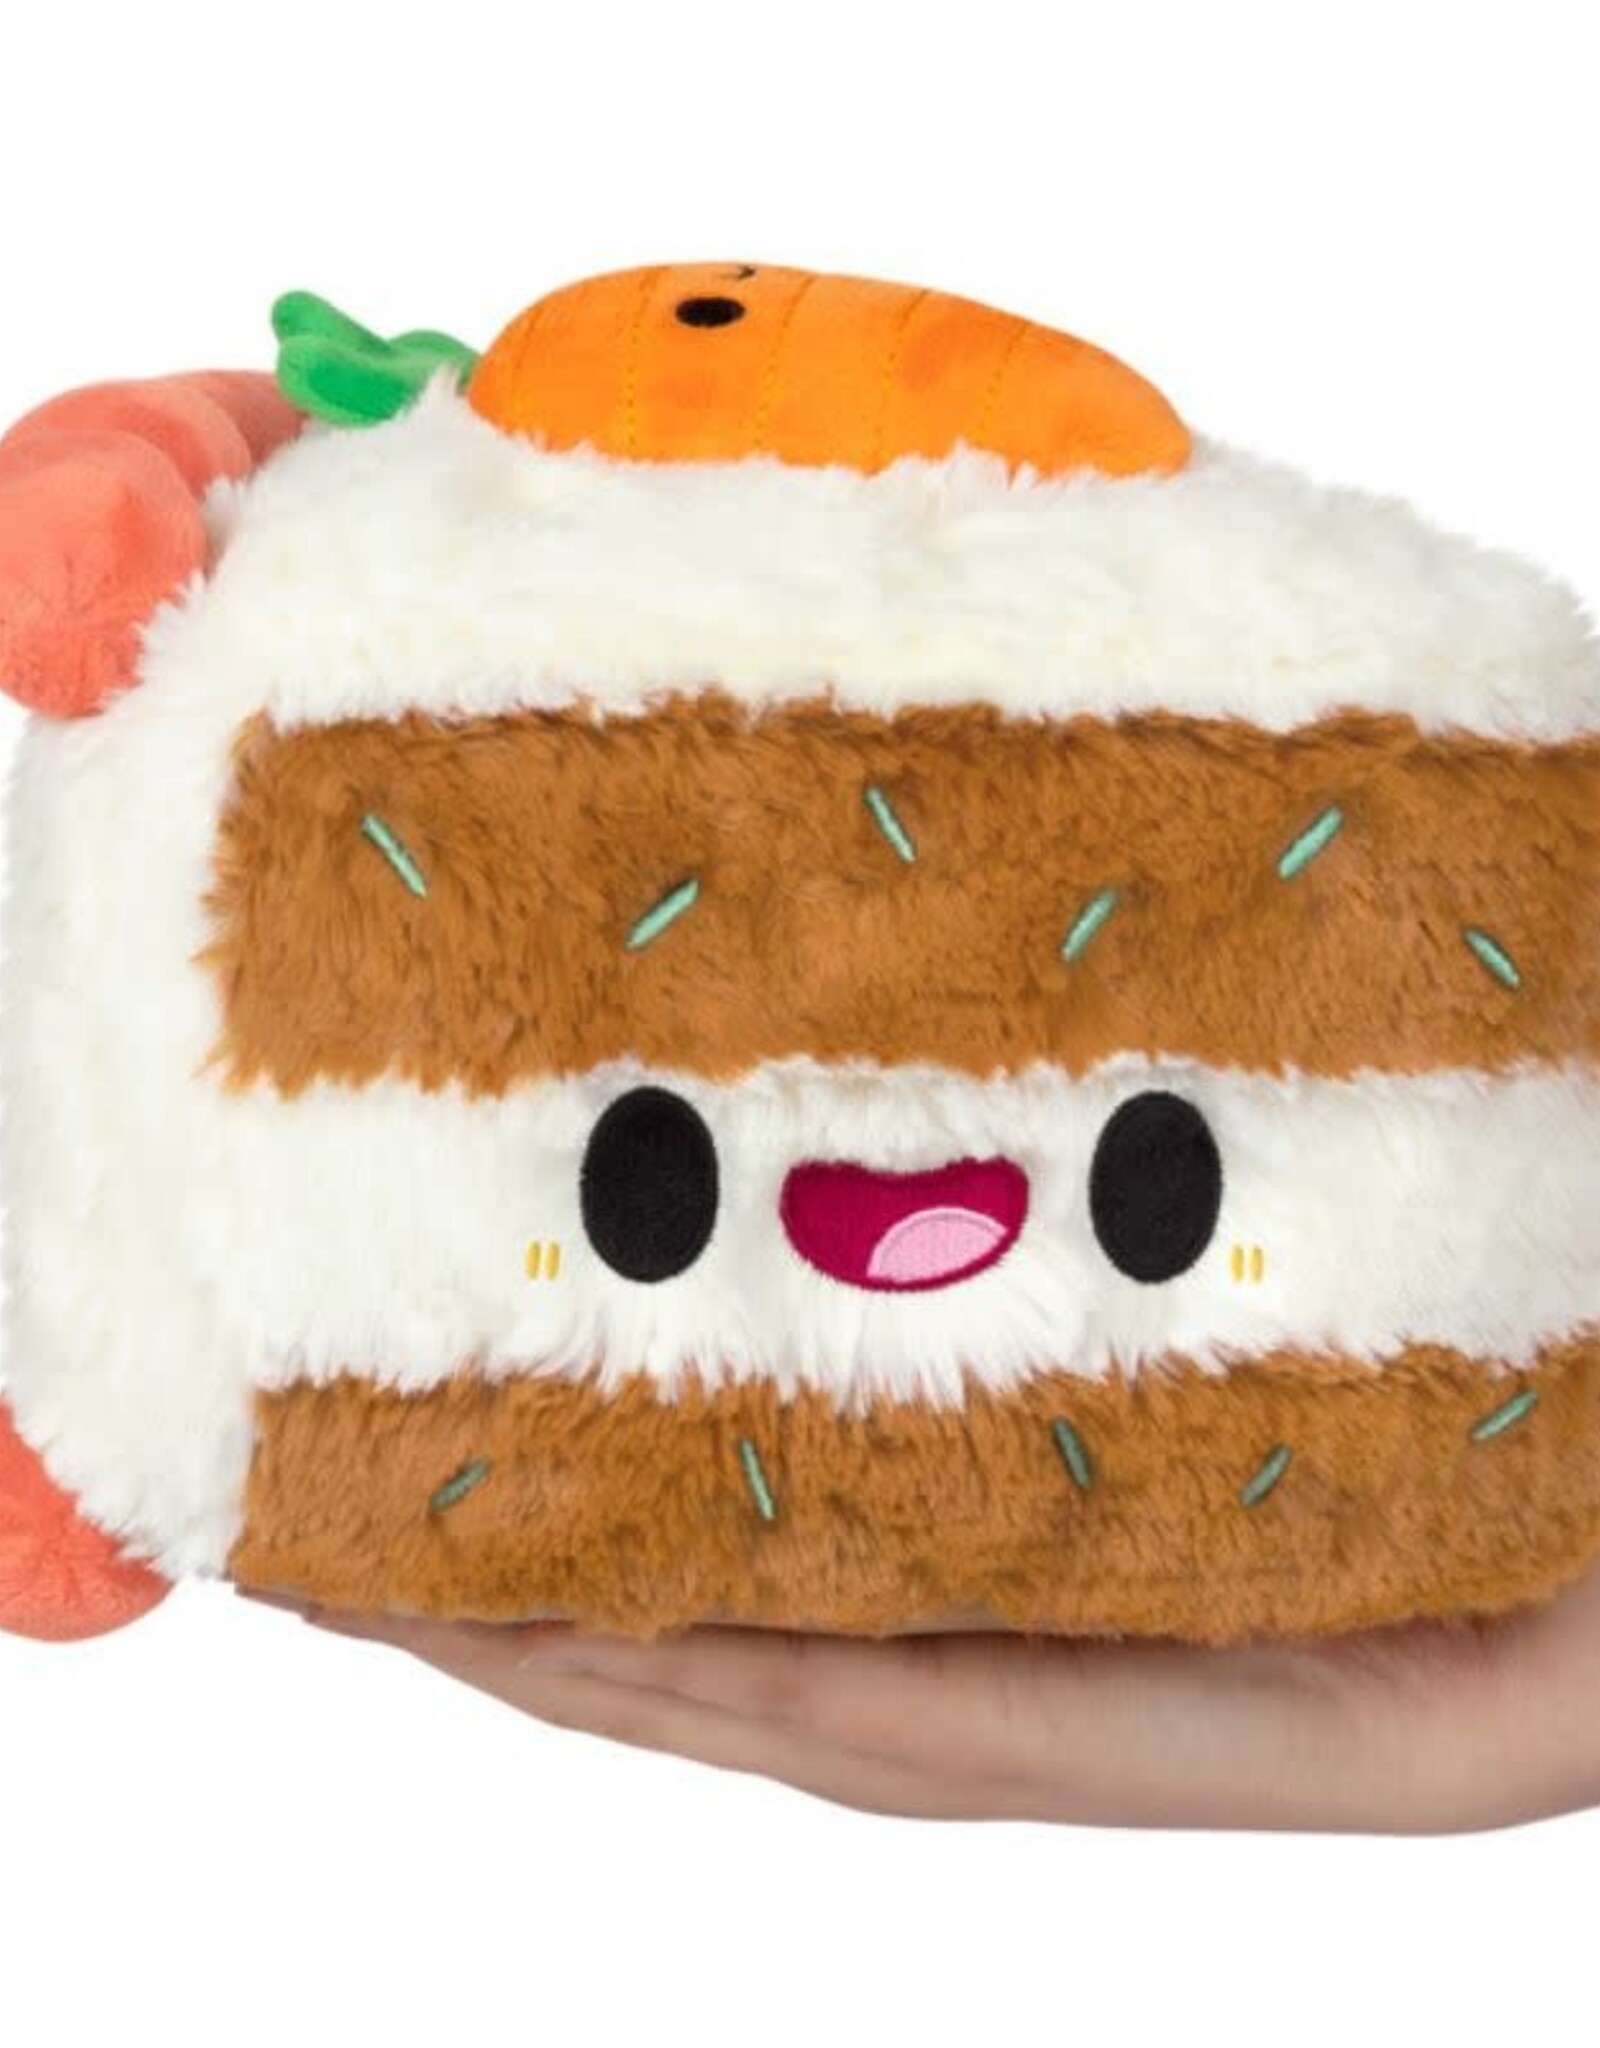 Squishable Mini Squishable: Carrot Cake